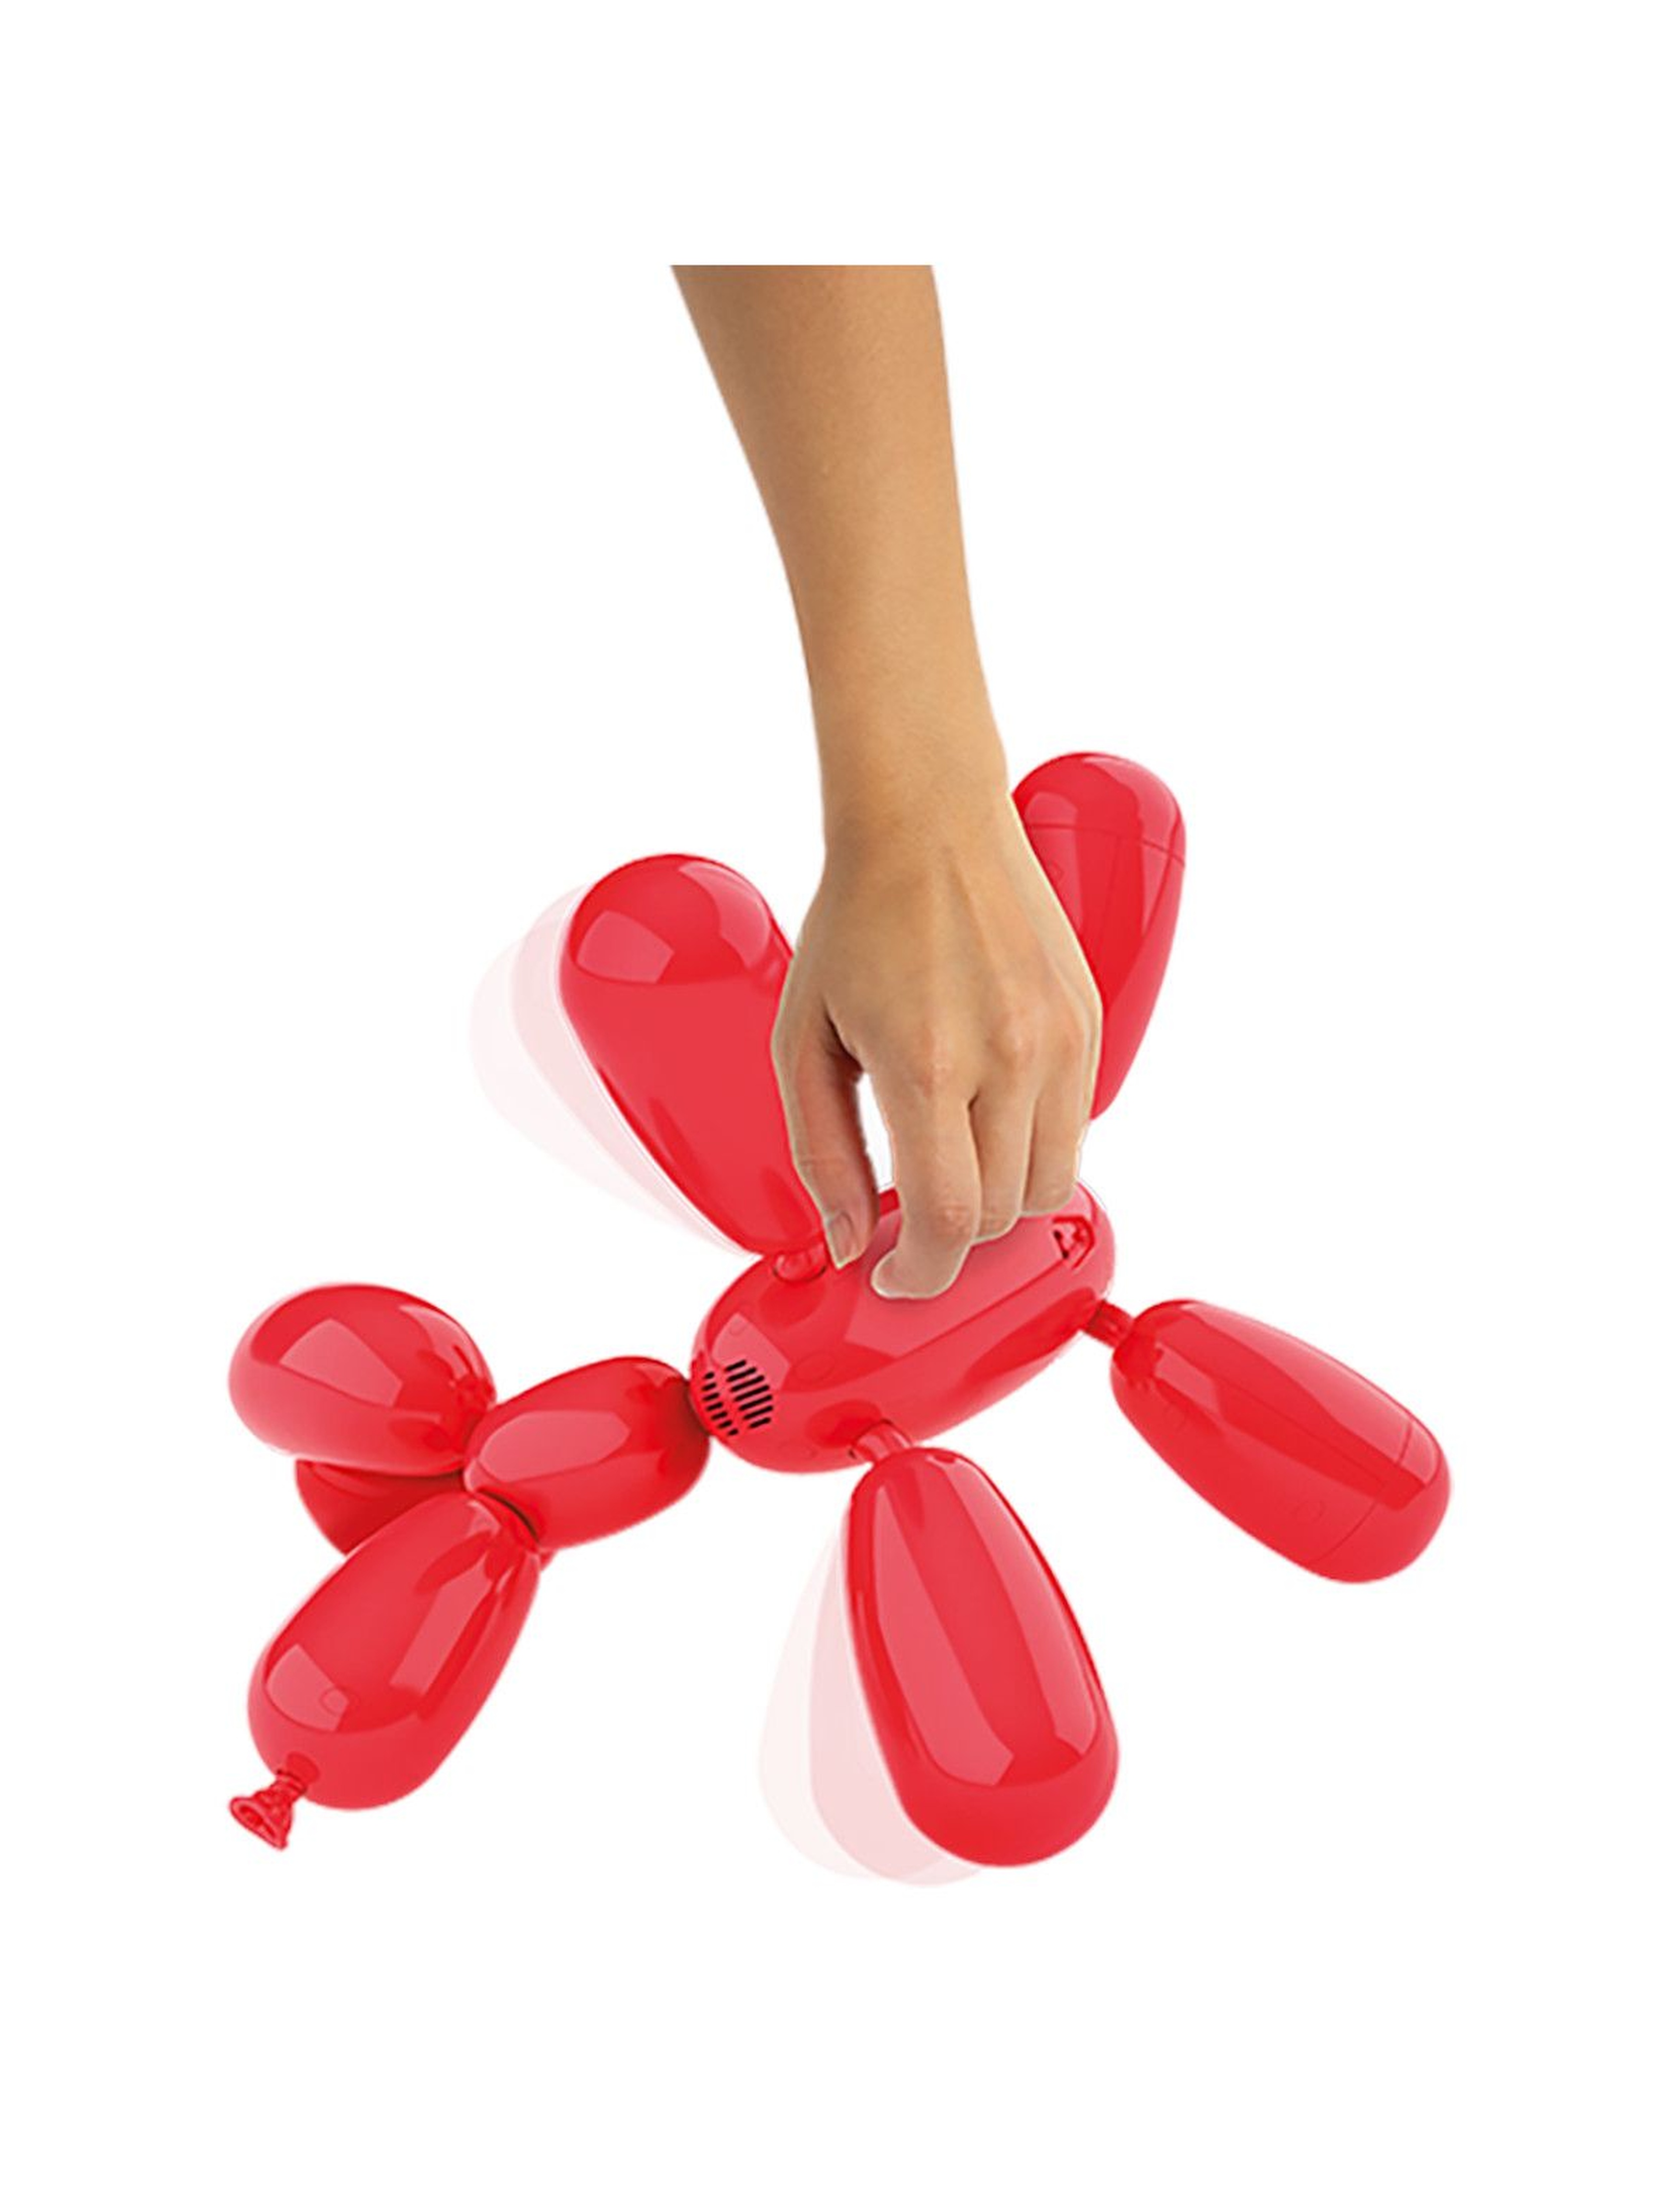 Interaktywny balonowy piesek - Squeakee wiek 5+